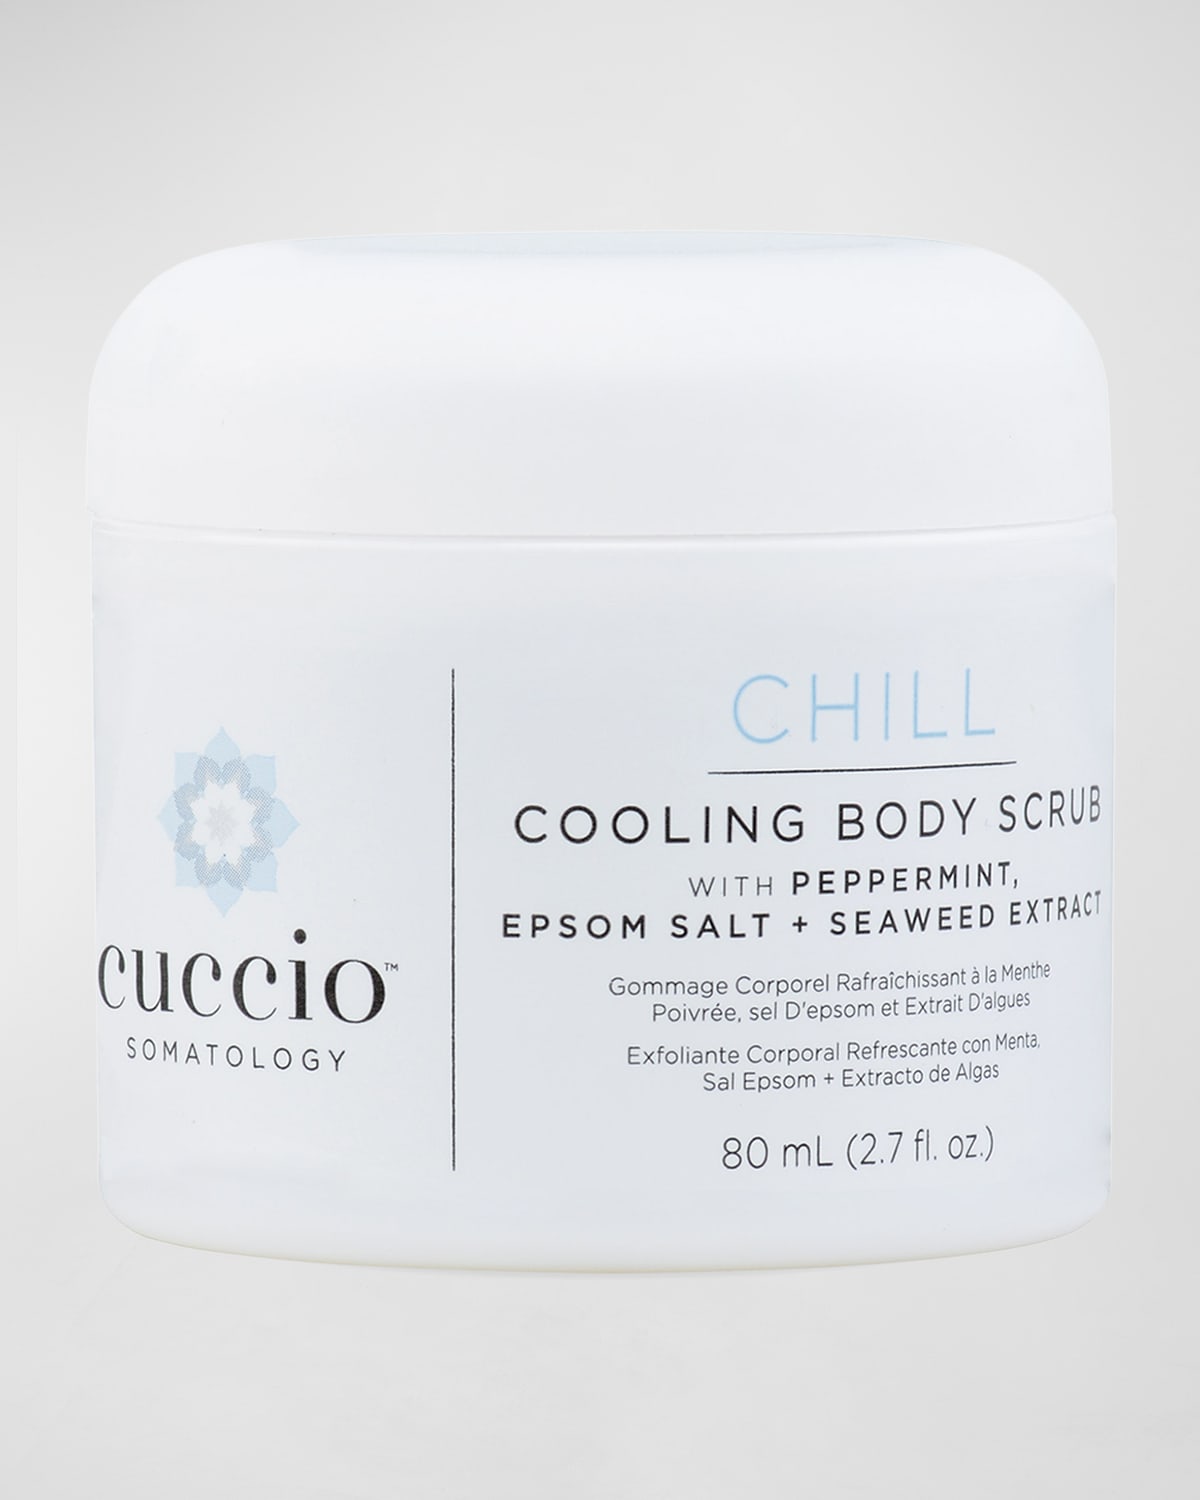 CUCCIO SOMATOLOGY 2.7 oz. Chill Cooling Body Scrub